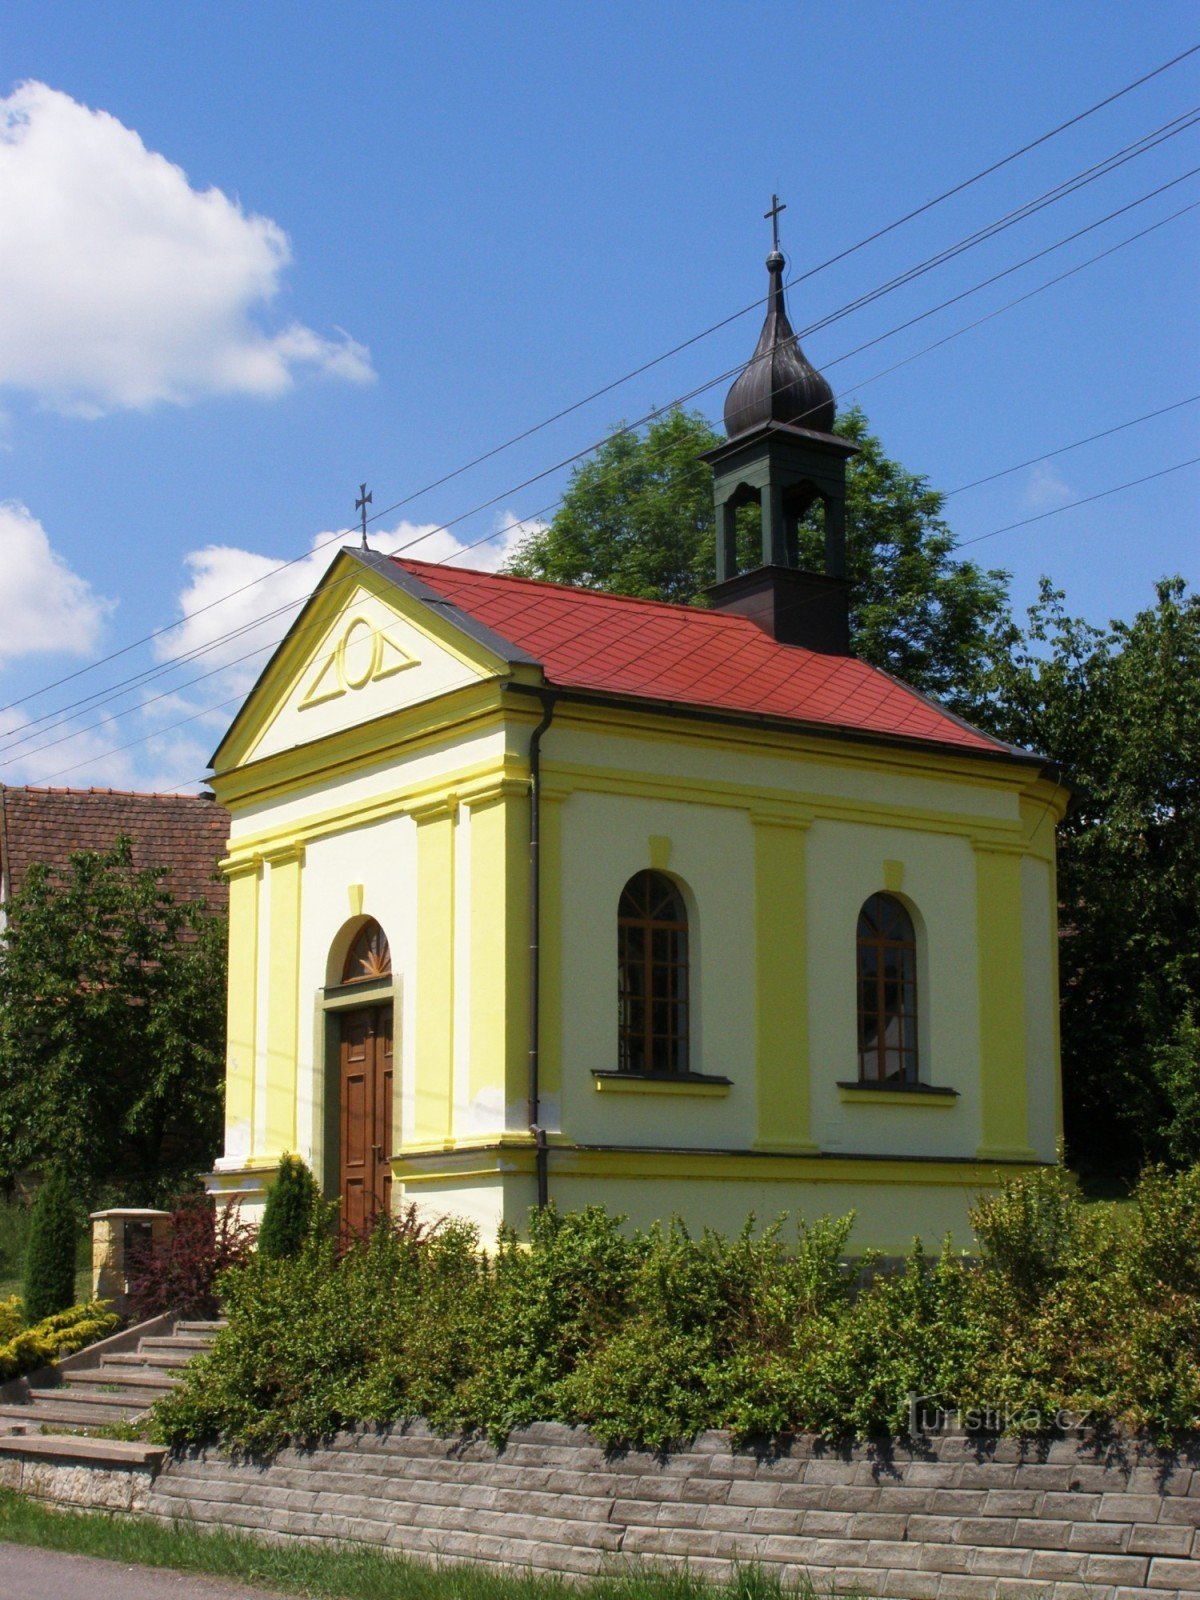 Slemeno - chapelle de St. Joseph